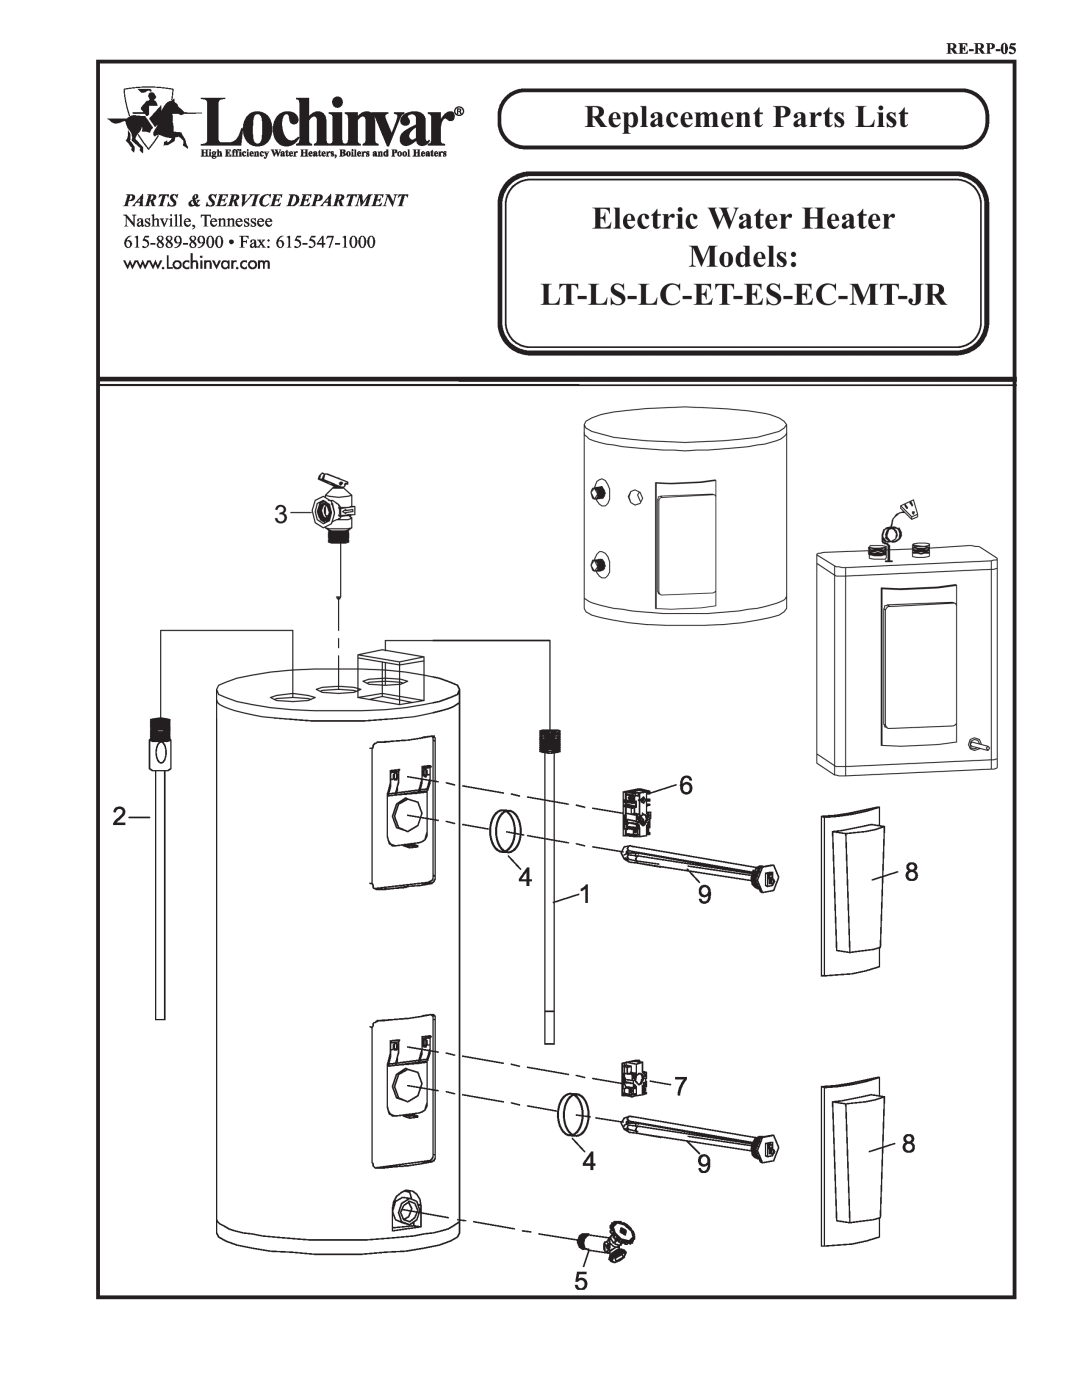 Lochinvar LC manual Replacement Parts List, Models, Electric Water Heater, Lt-Ls-Lc-Et-Es-Ec-Mt-Jr, Nashville, Tennessee 